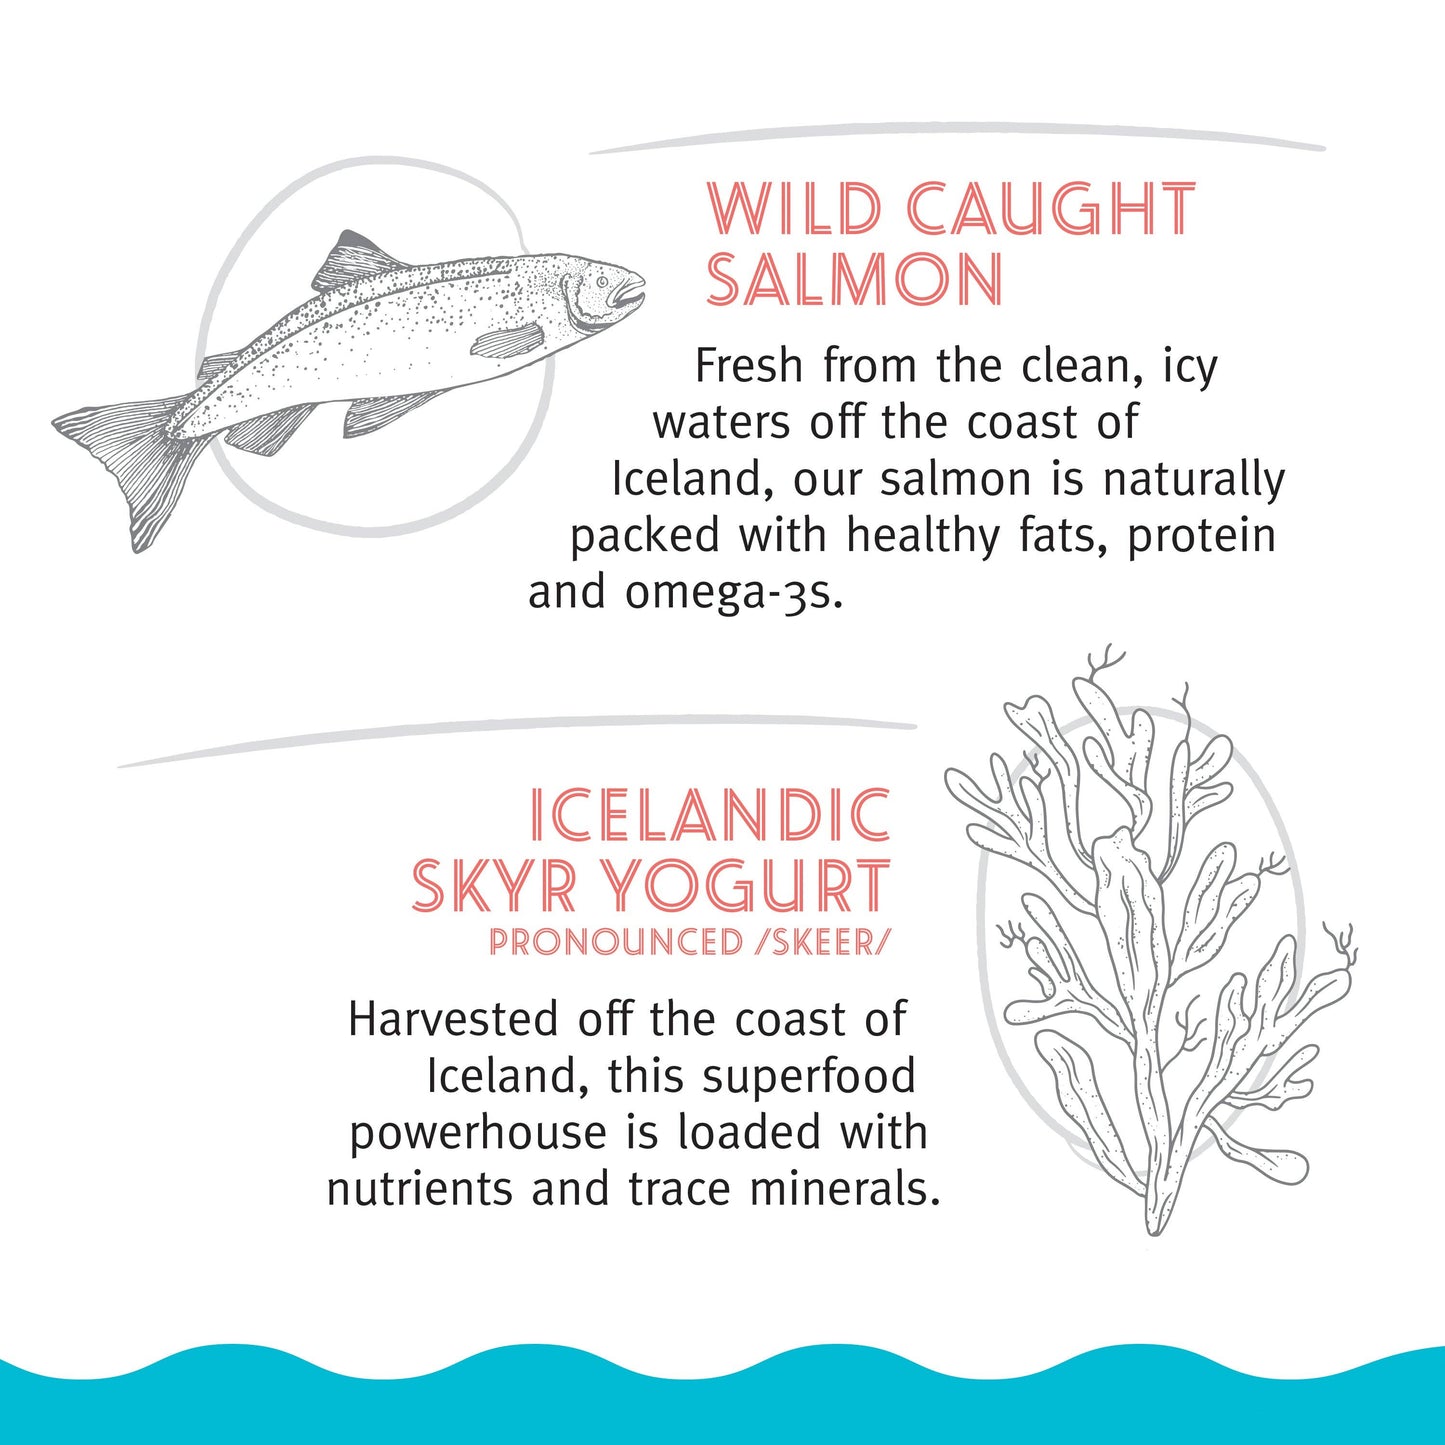 Icelandic+ Soft Chew Nibblets Salmon & Seaweed Dog Treats